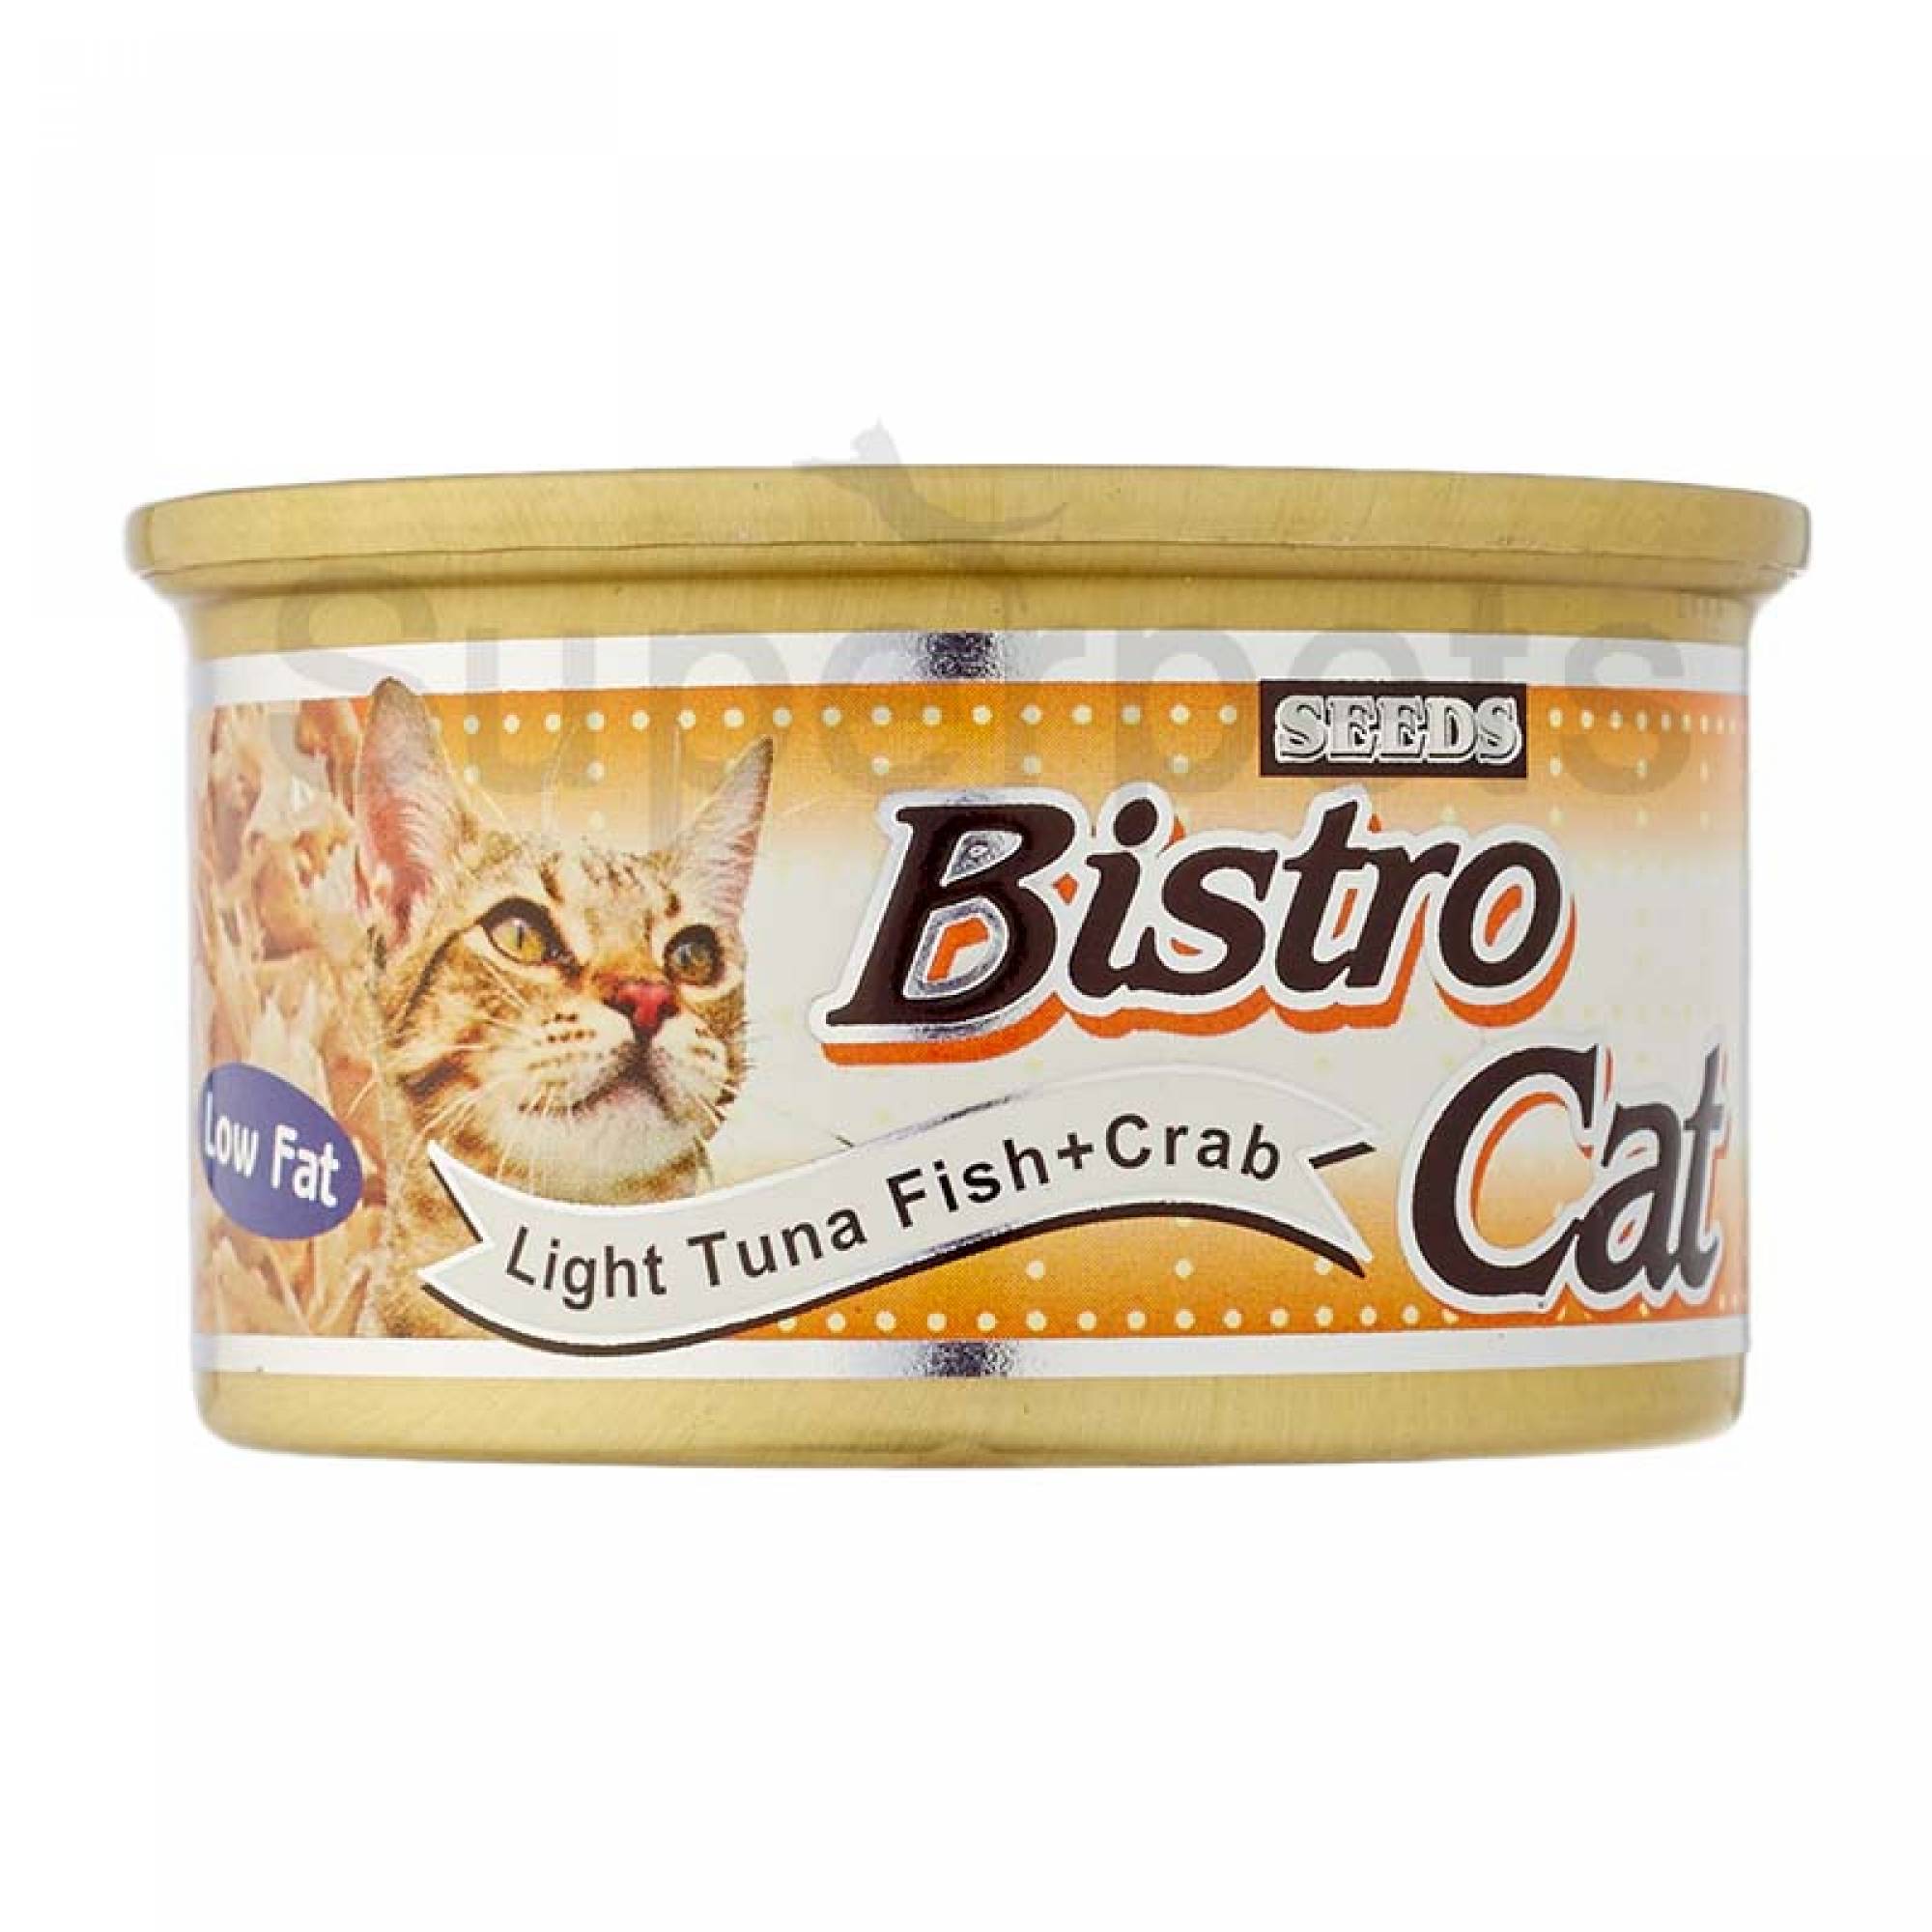 Bistro Cat Light Tuna Fish + Crab 80g